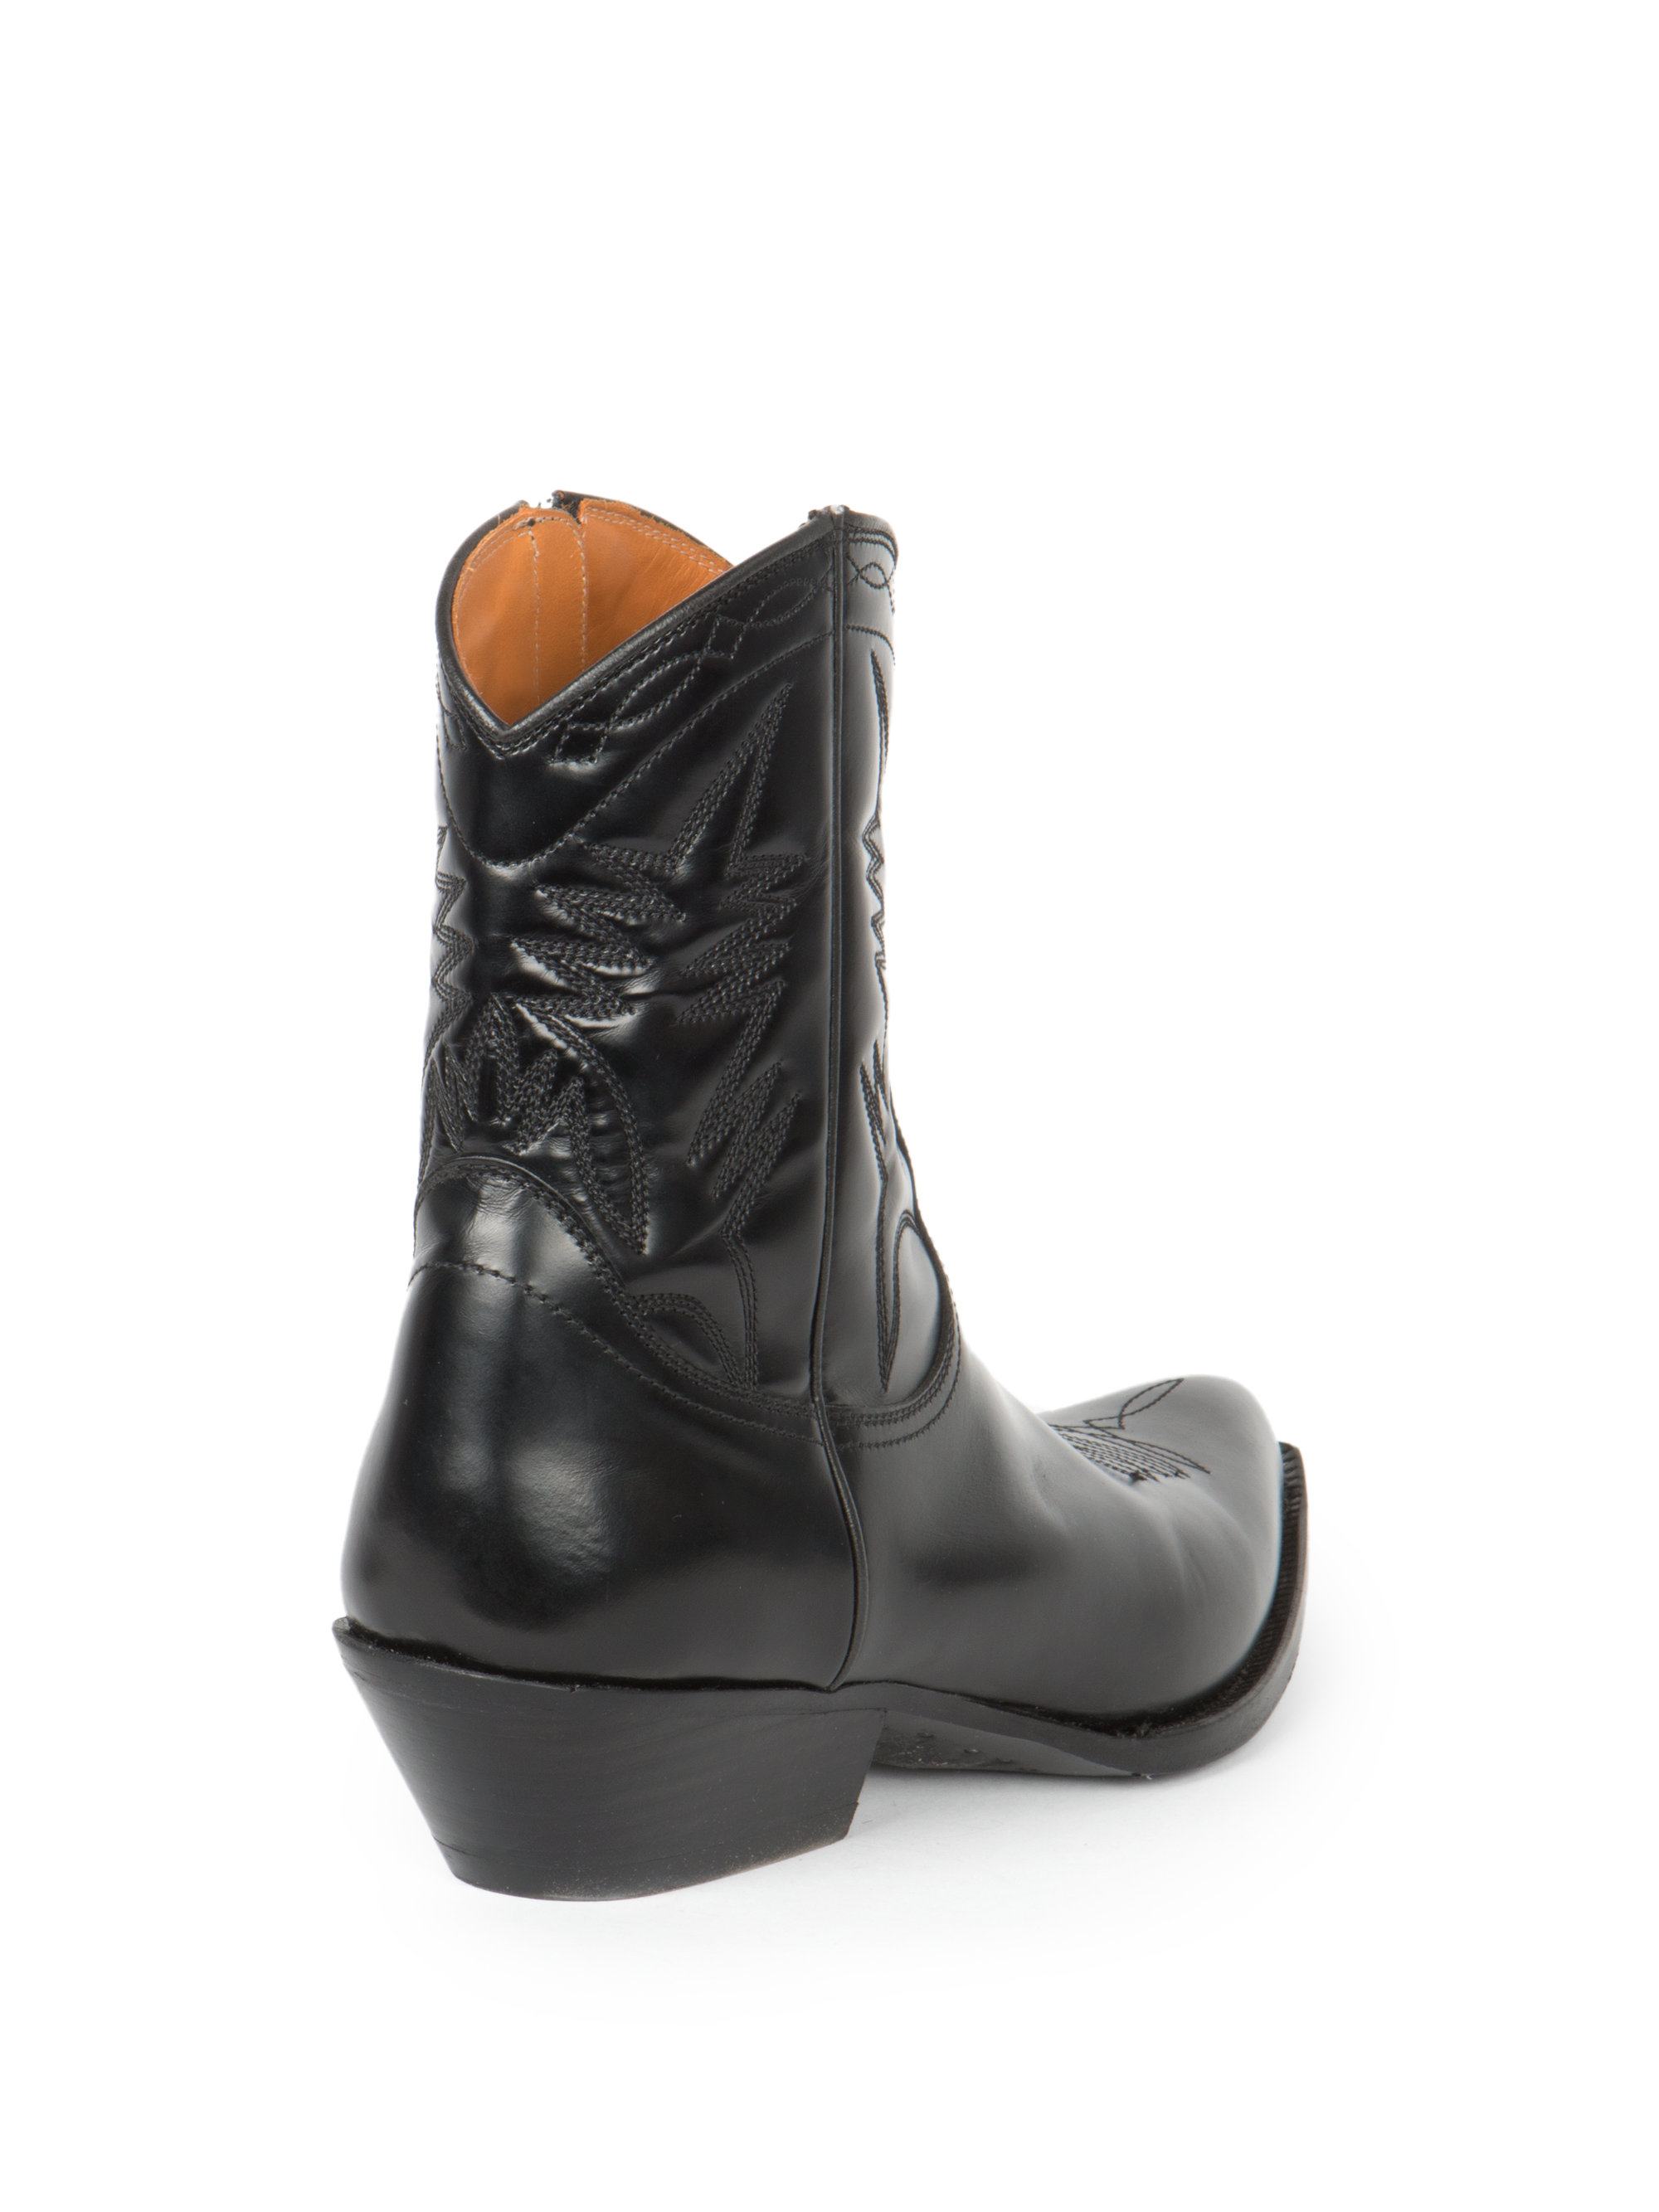 Saint Laurent Santiag Leather Western Ankle Boots in Black - Lyst